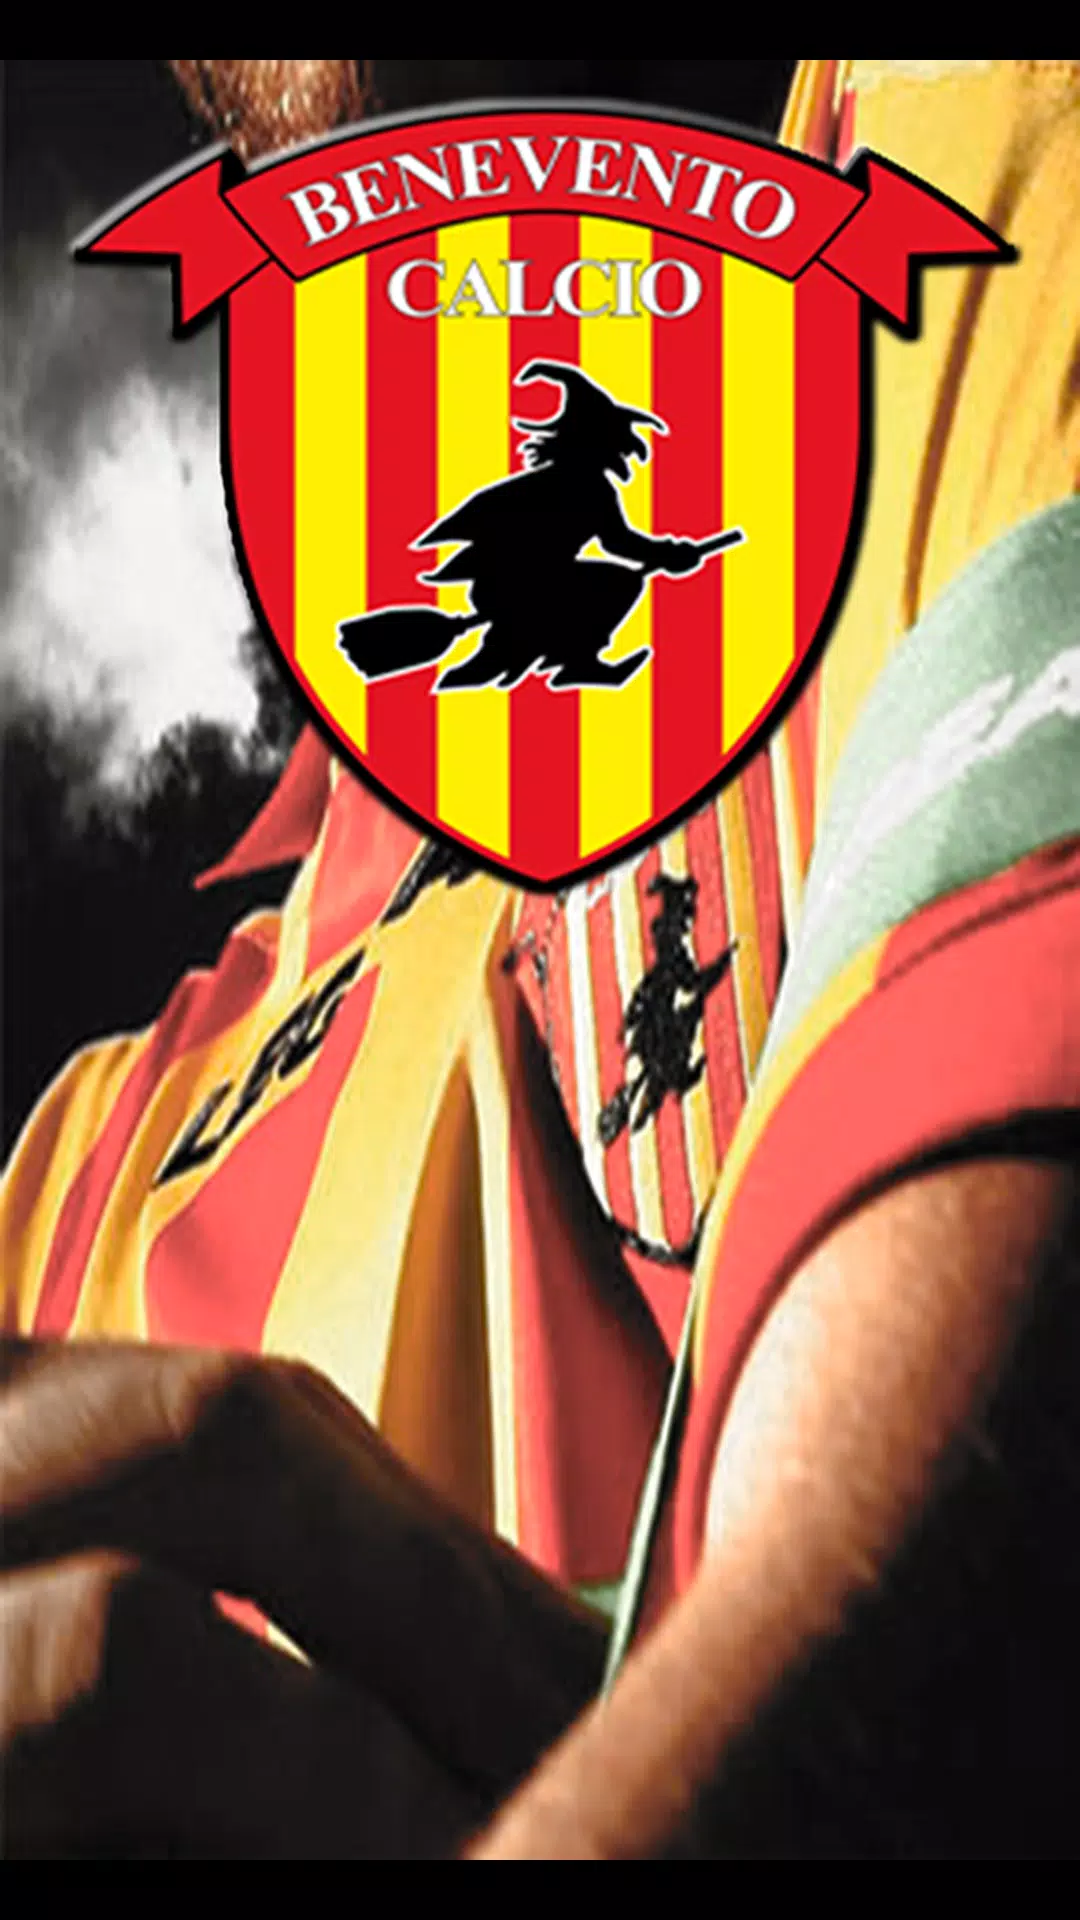 Benevento Calcio News APK for Android Download